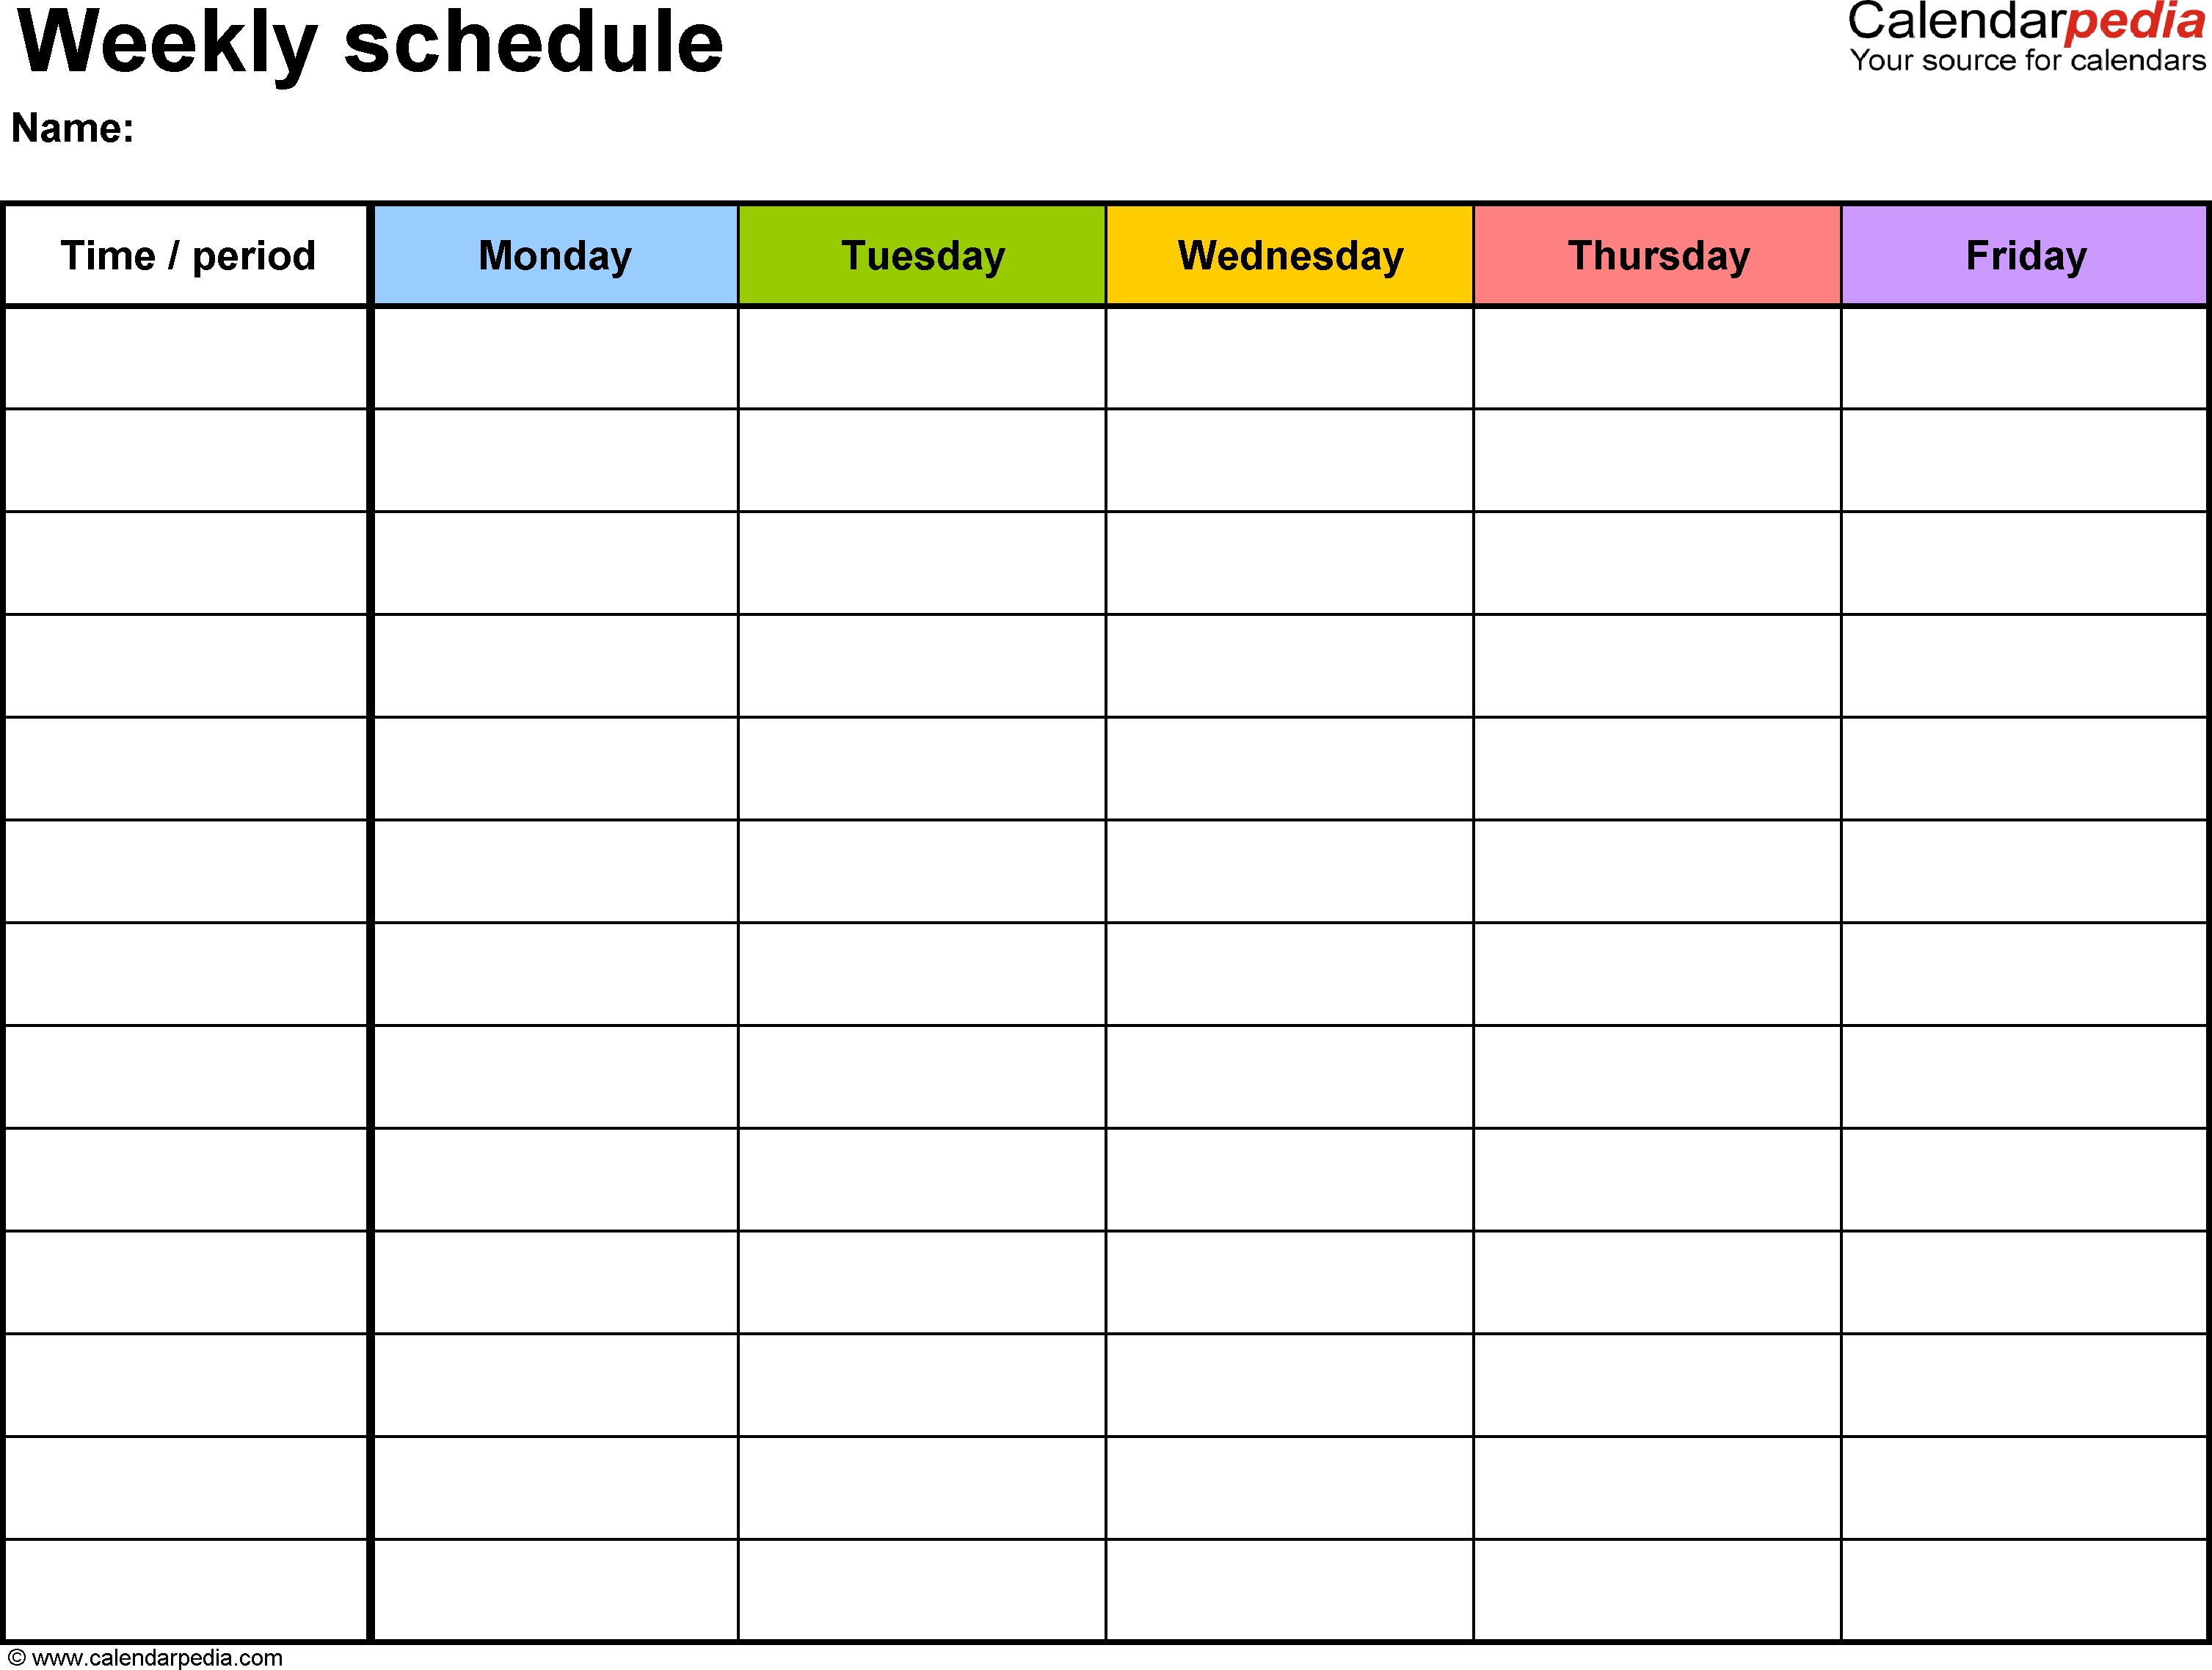 Free Weekly Schedule Templates For Word - 18 Templates Perky Blank Calendar 1 Week